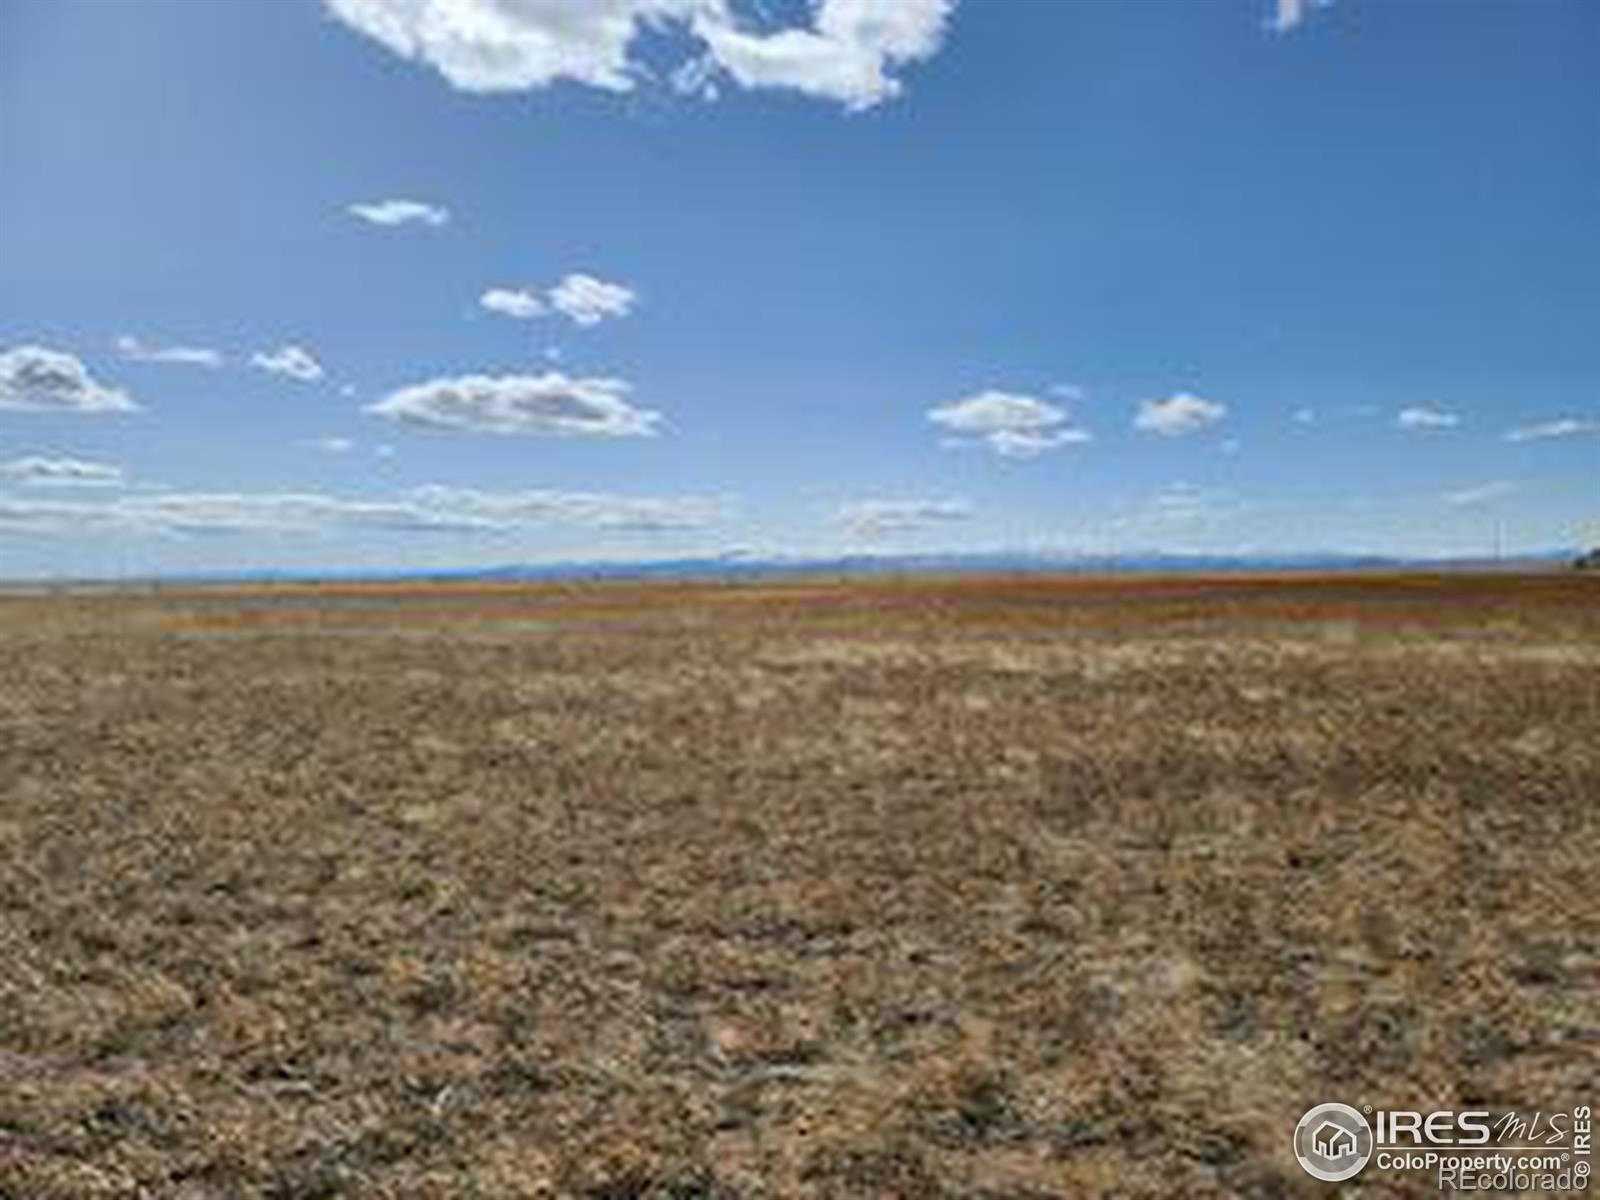 View Nunn, CO 80648 land